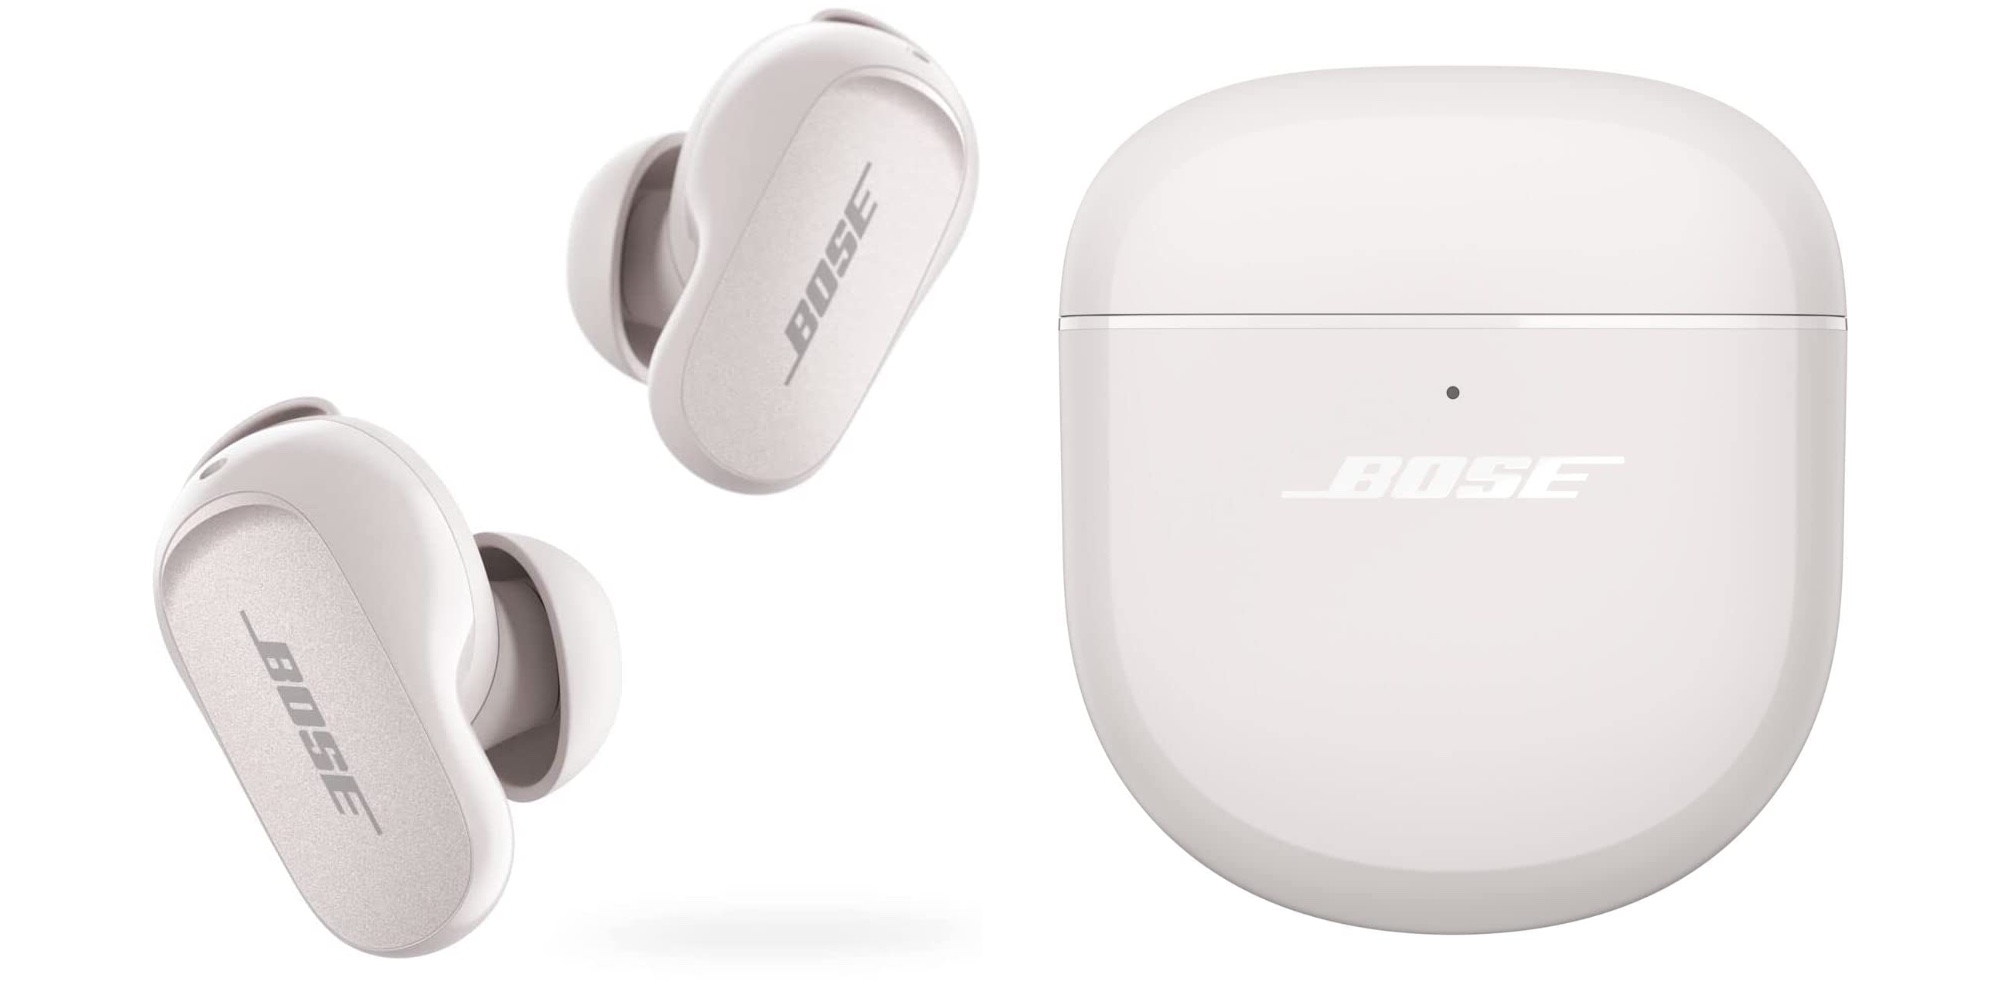 Bose QuietComfort Earbuds II sport ANC, adaptive transparency